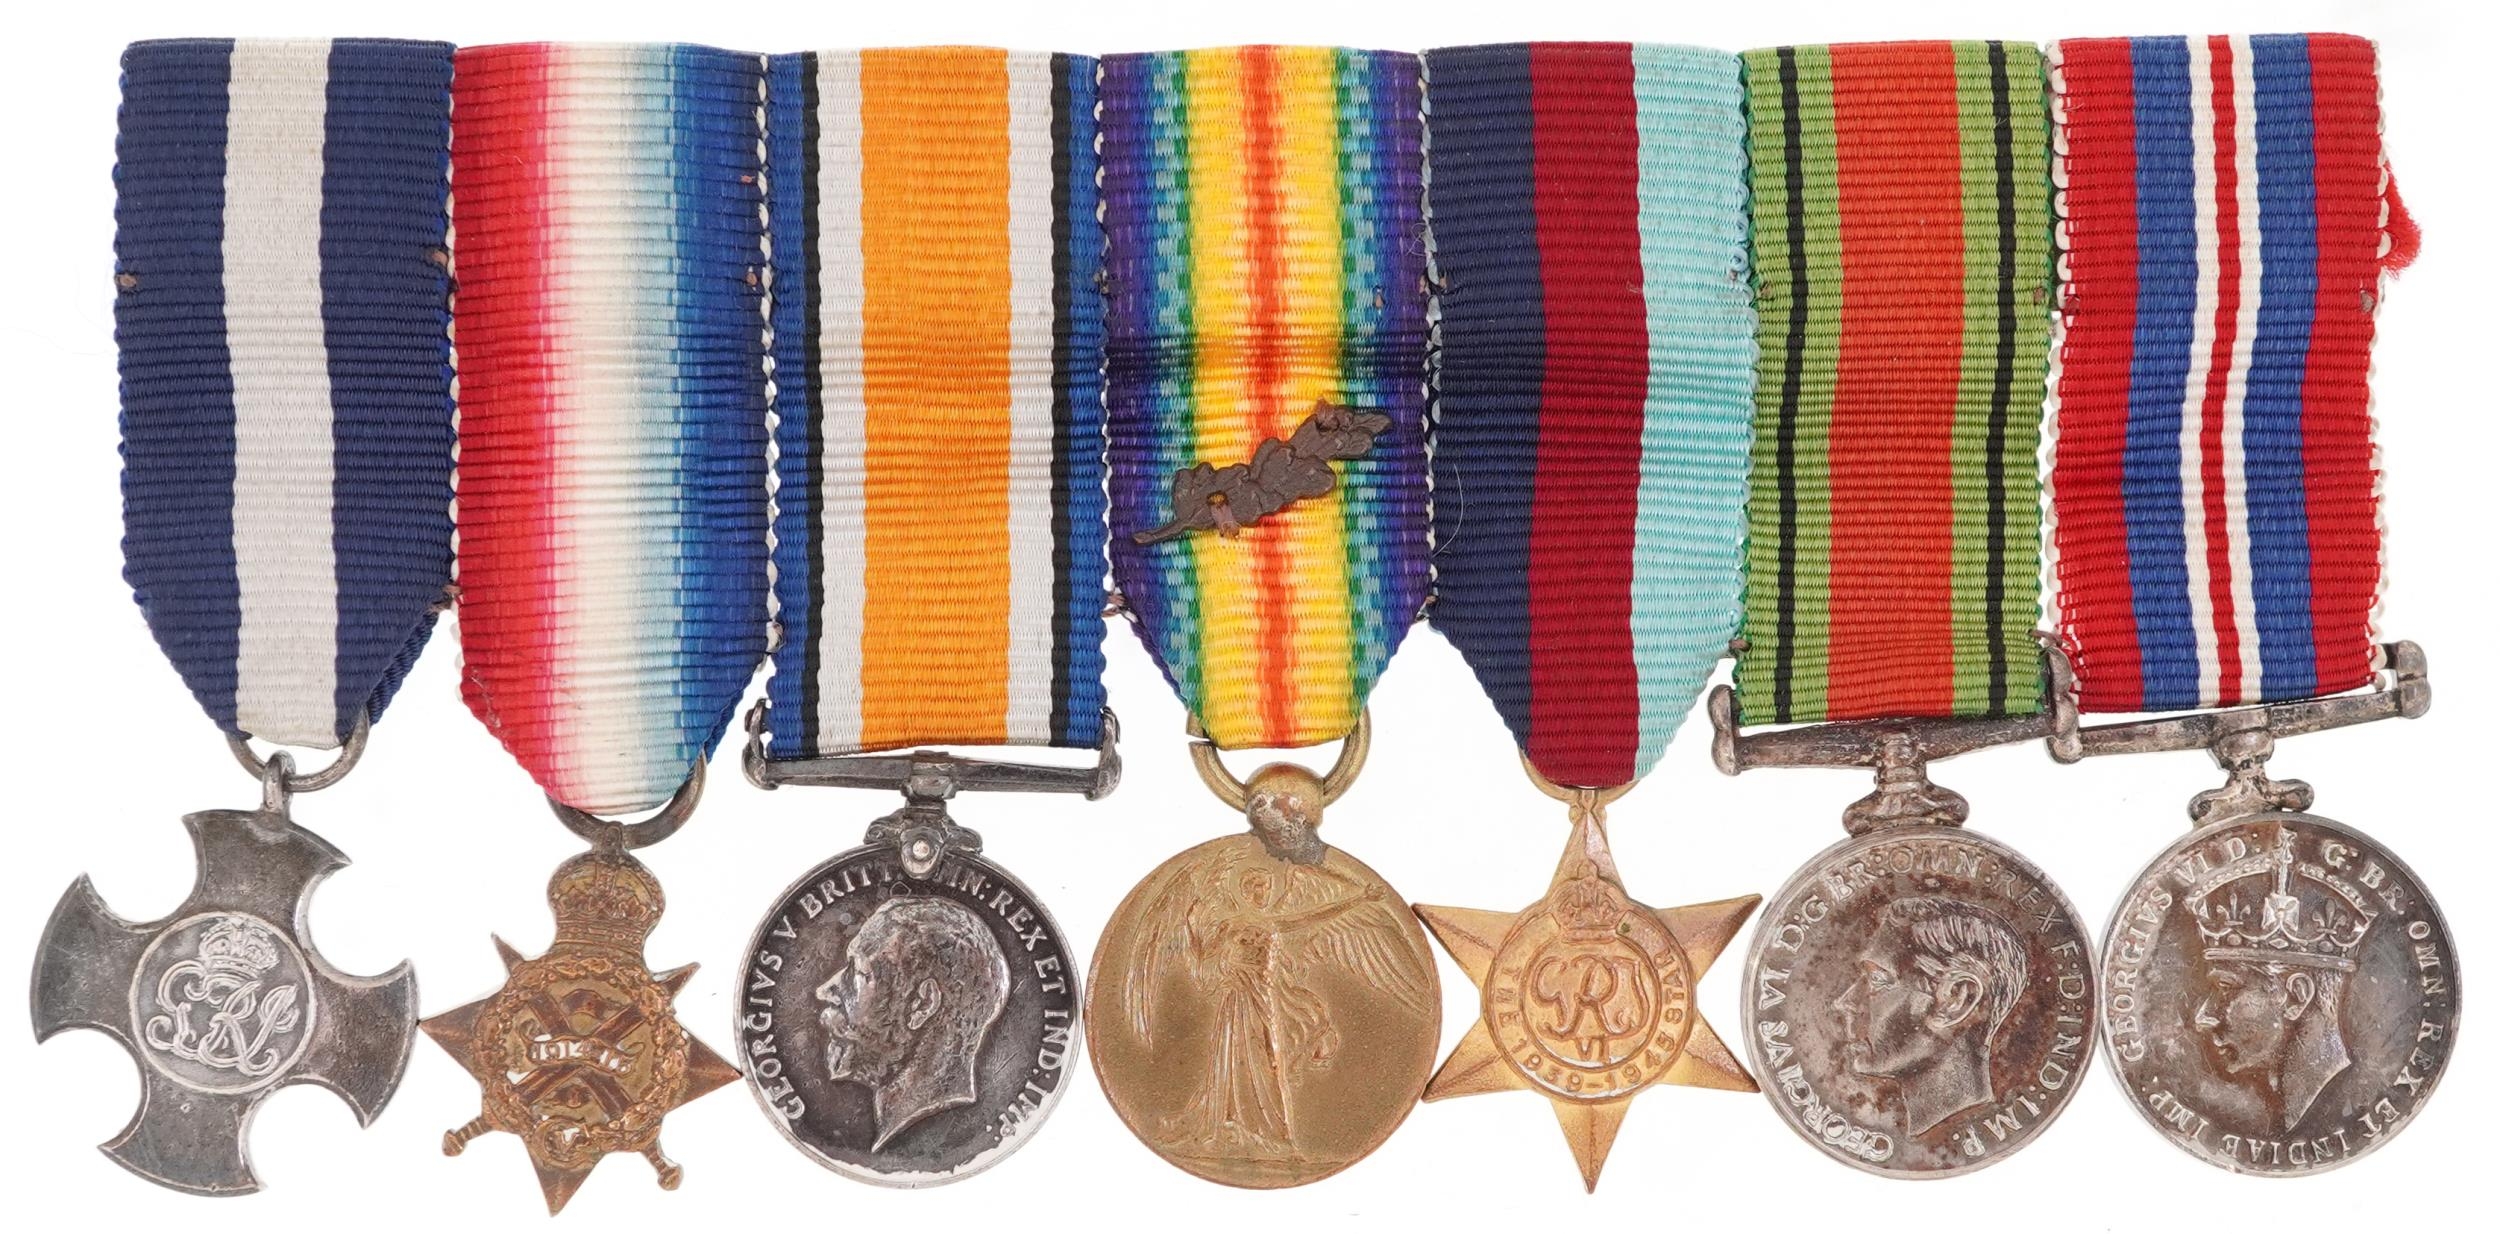 British military World War I dress medals including Distinguished Service Cross - Image 2 of 3